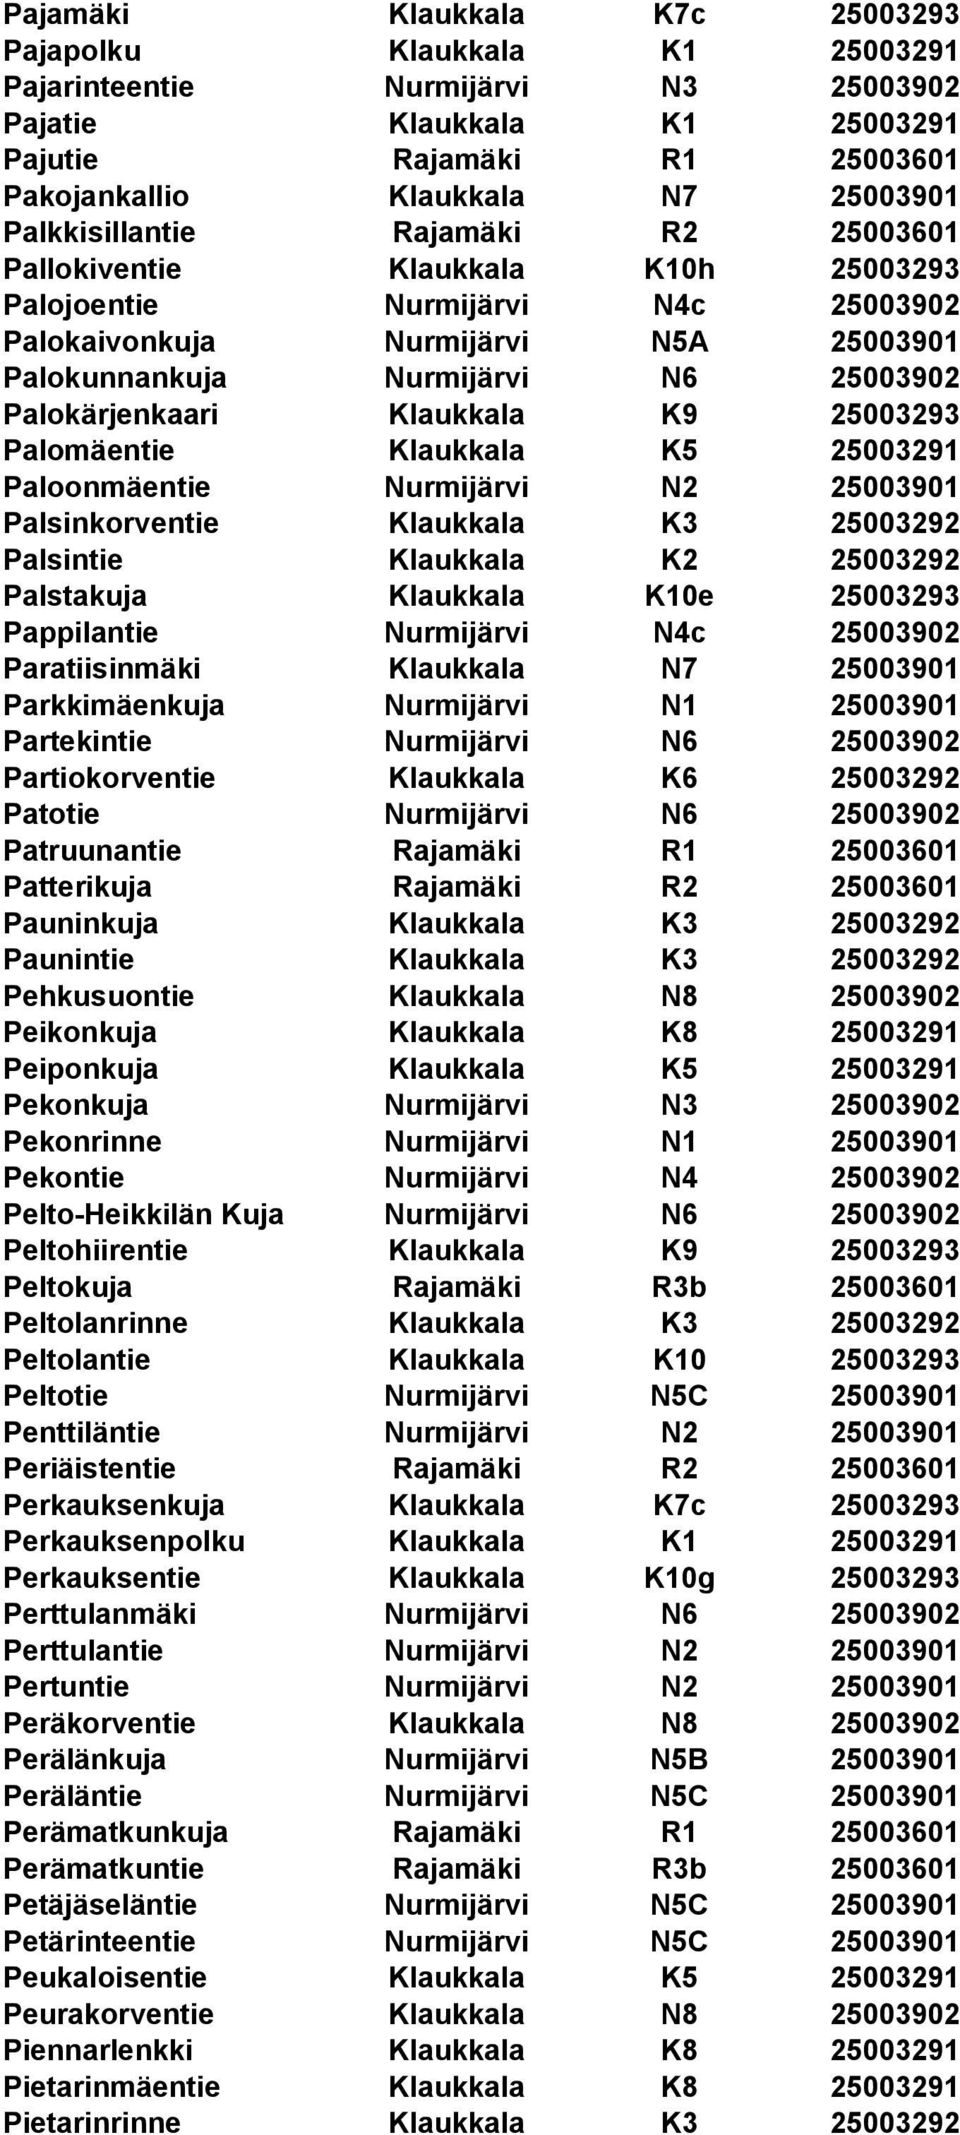 Palokärjenkaari Klaukkala K9 25003293 Palomäentie Klaukkala K5 25003291 Paloonmäentie Nurmijärvi N2 25003901 Palsinkorventie Klaukkala K3 25003292 Palsintie Klaukkala K2 25003292 Palstakuja Klaukkala